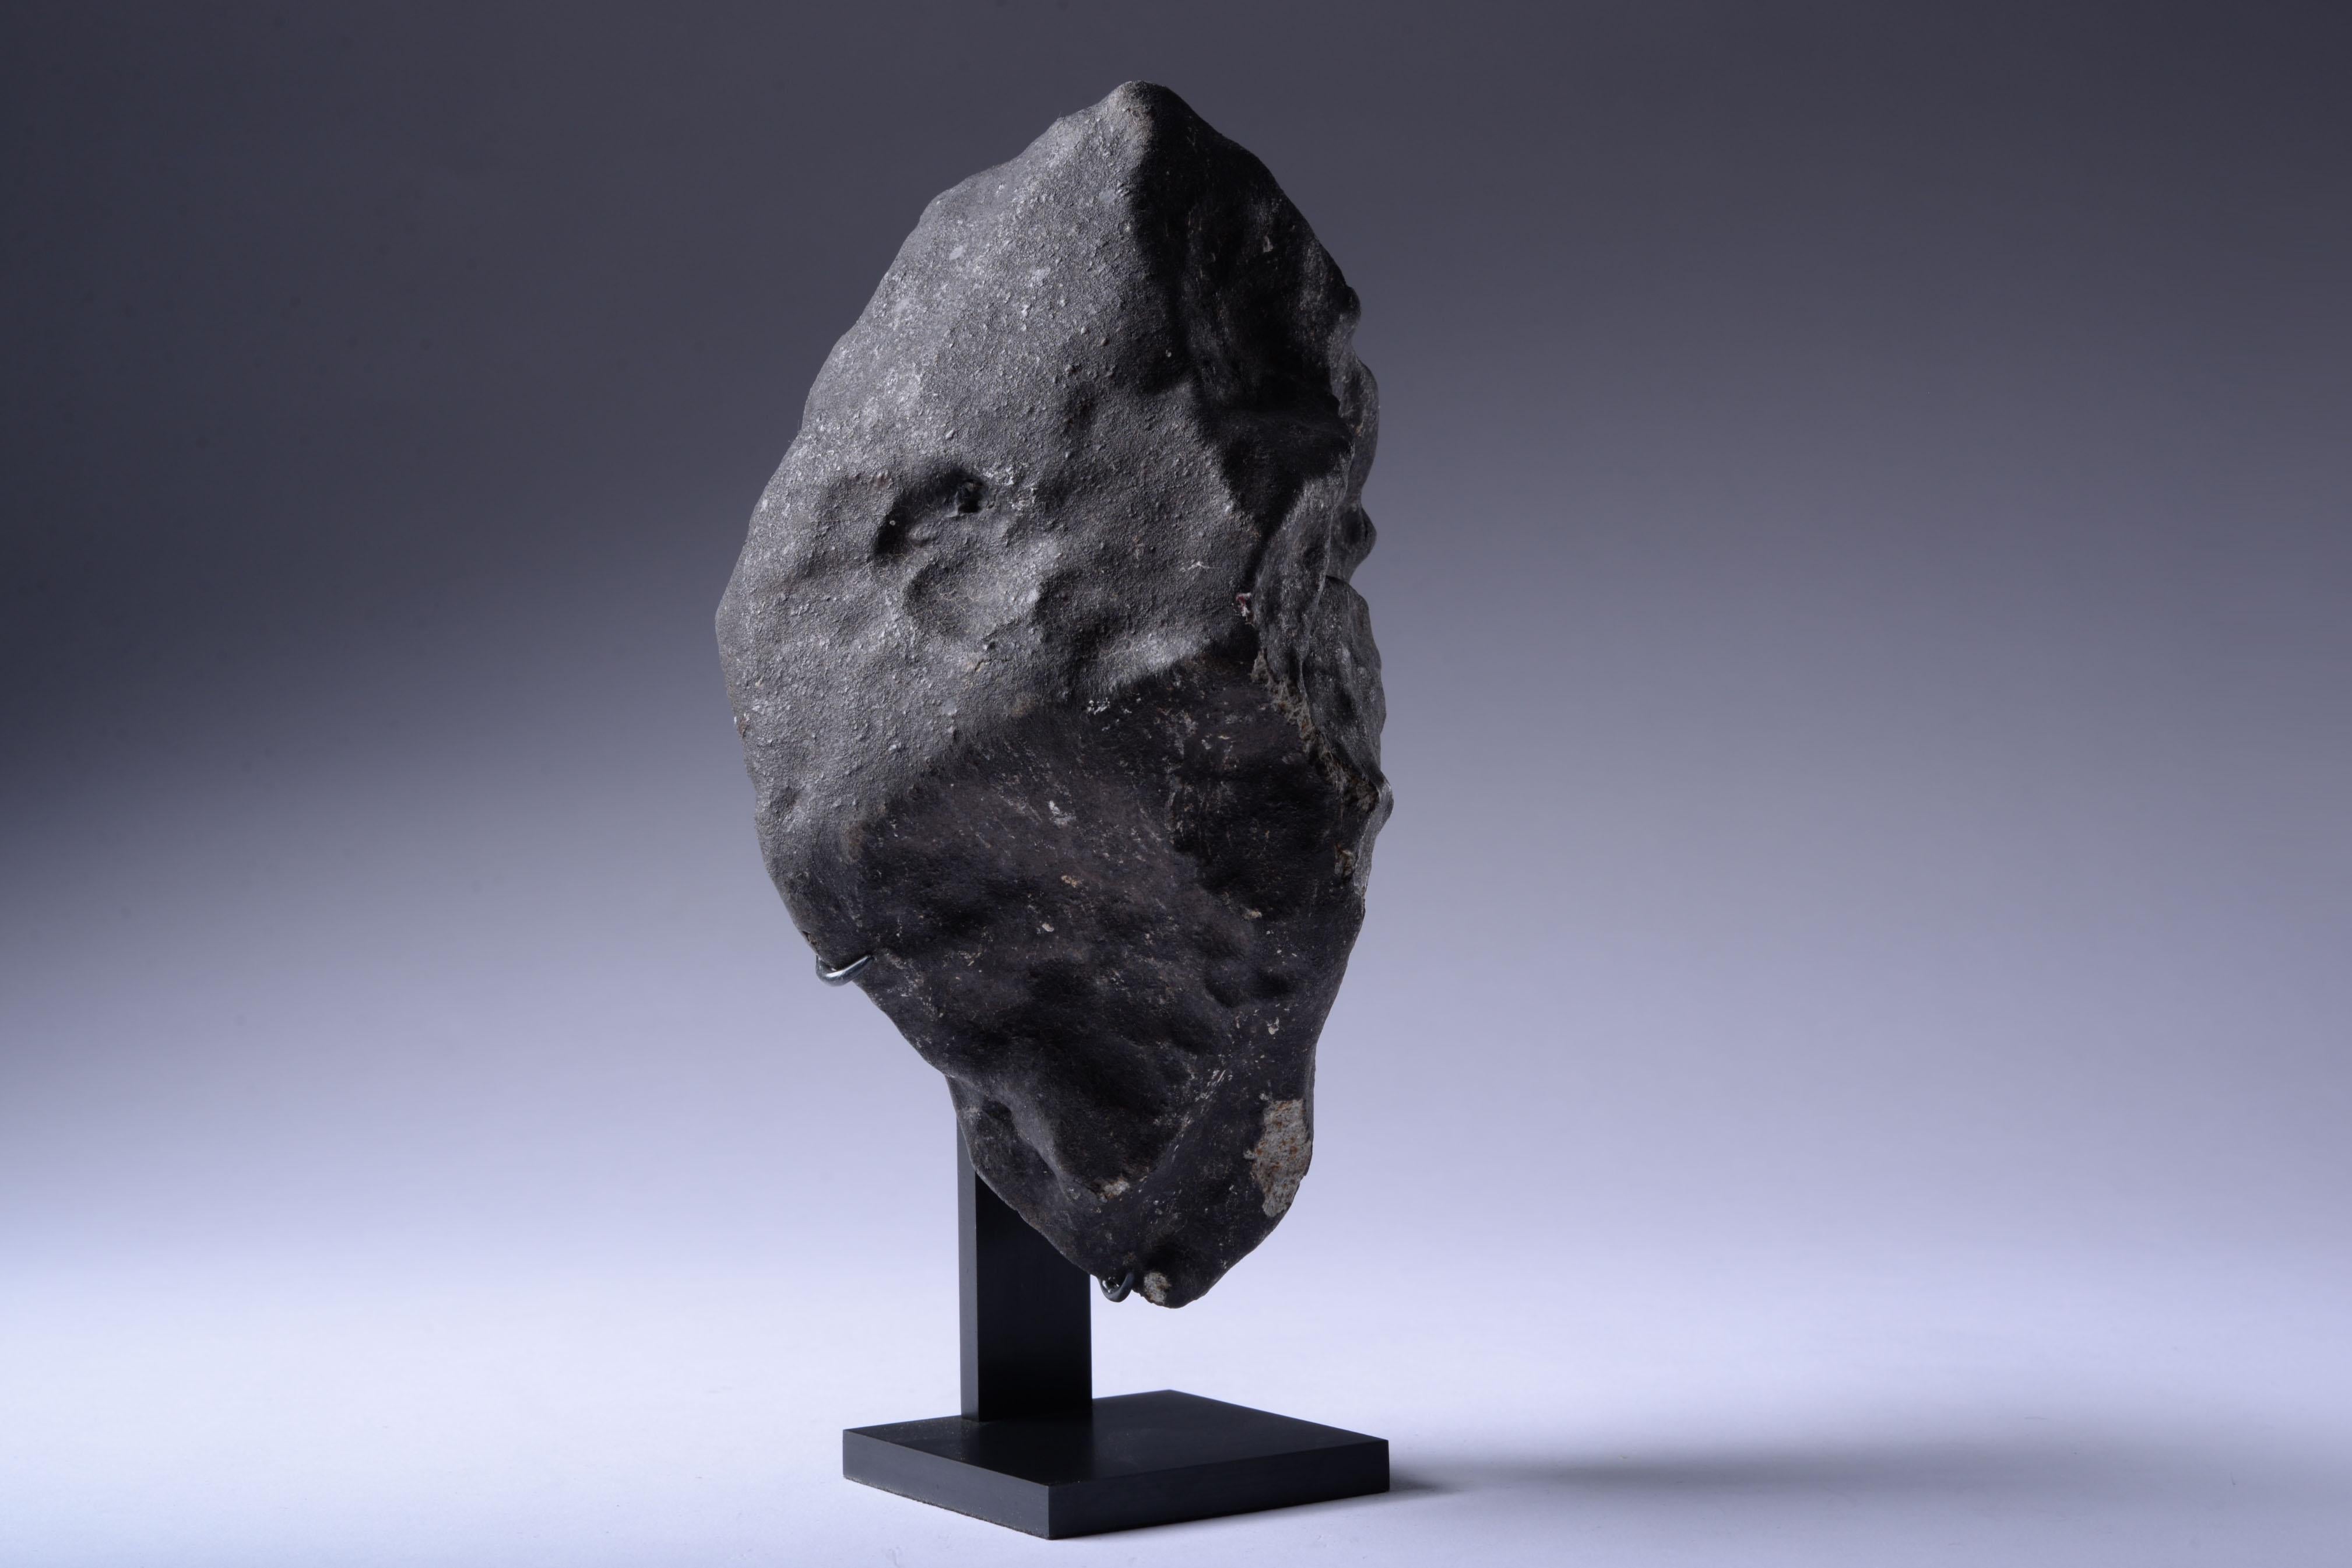 Libyan Stone Meteorite with Black Fusion Crust